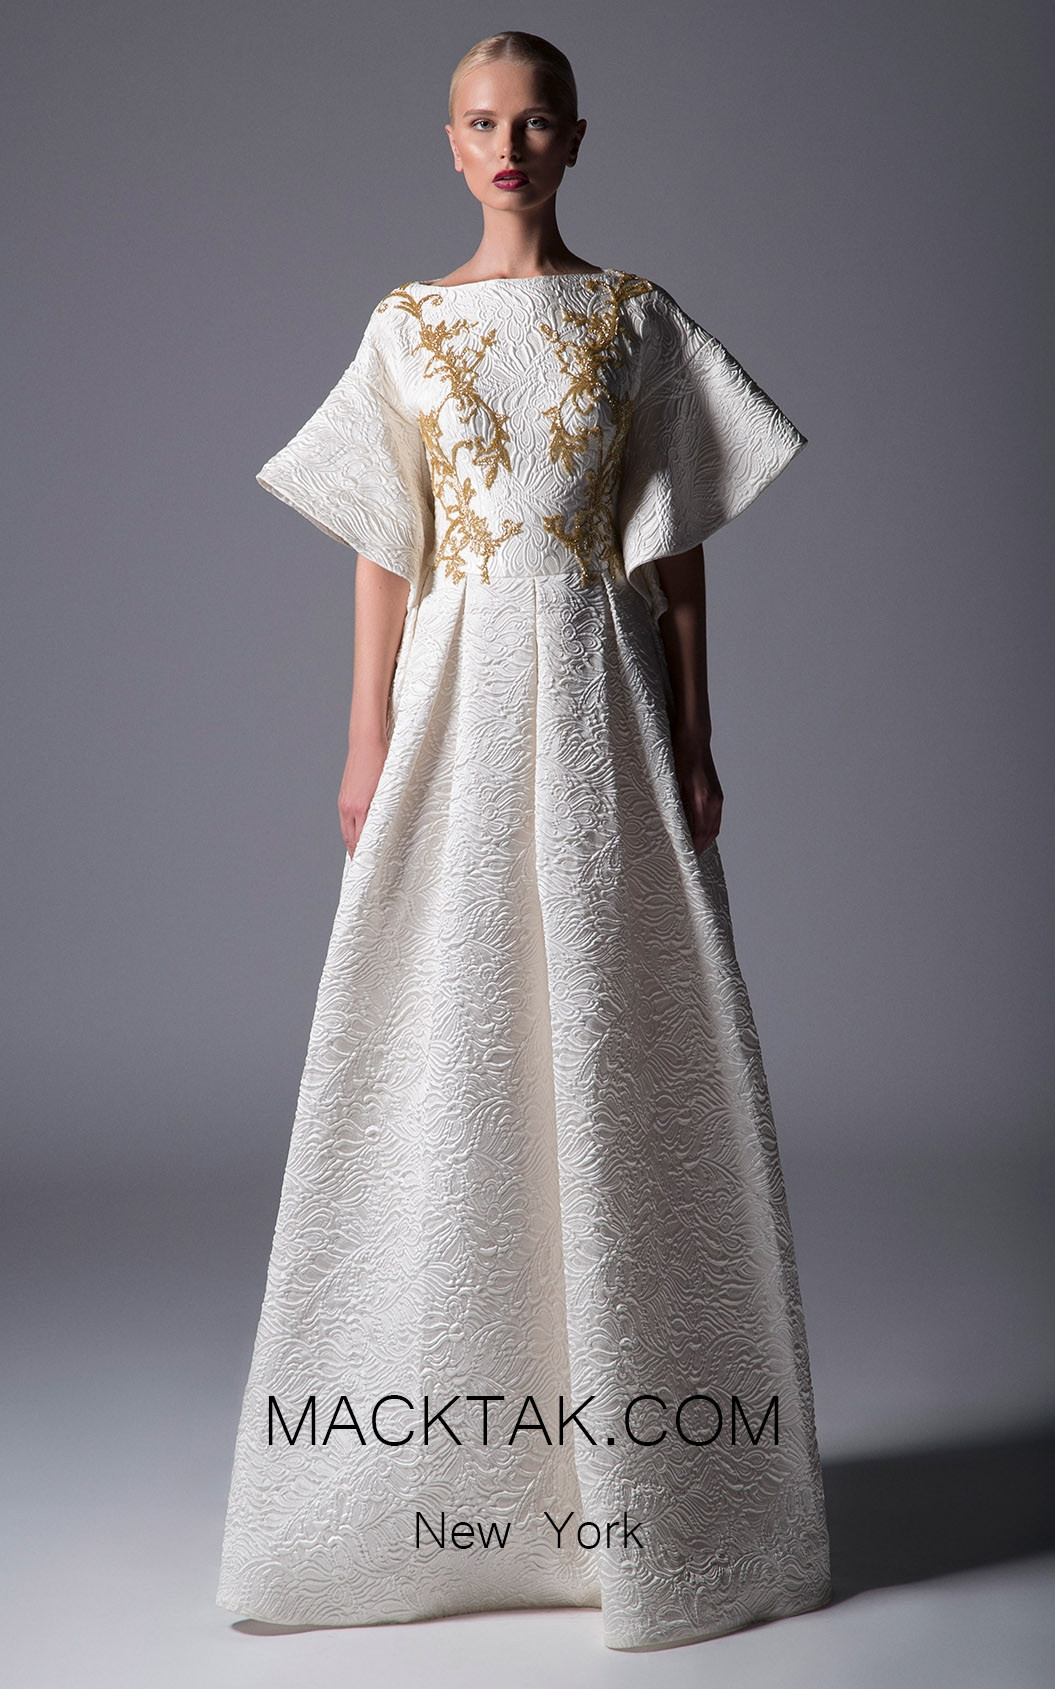 Edsward Arsouni La Gioia White Front Dress